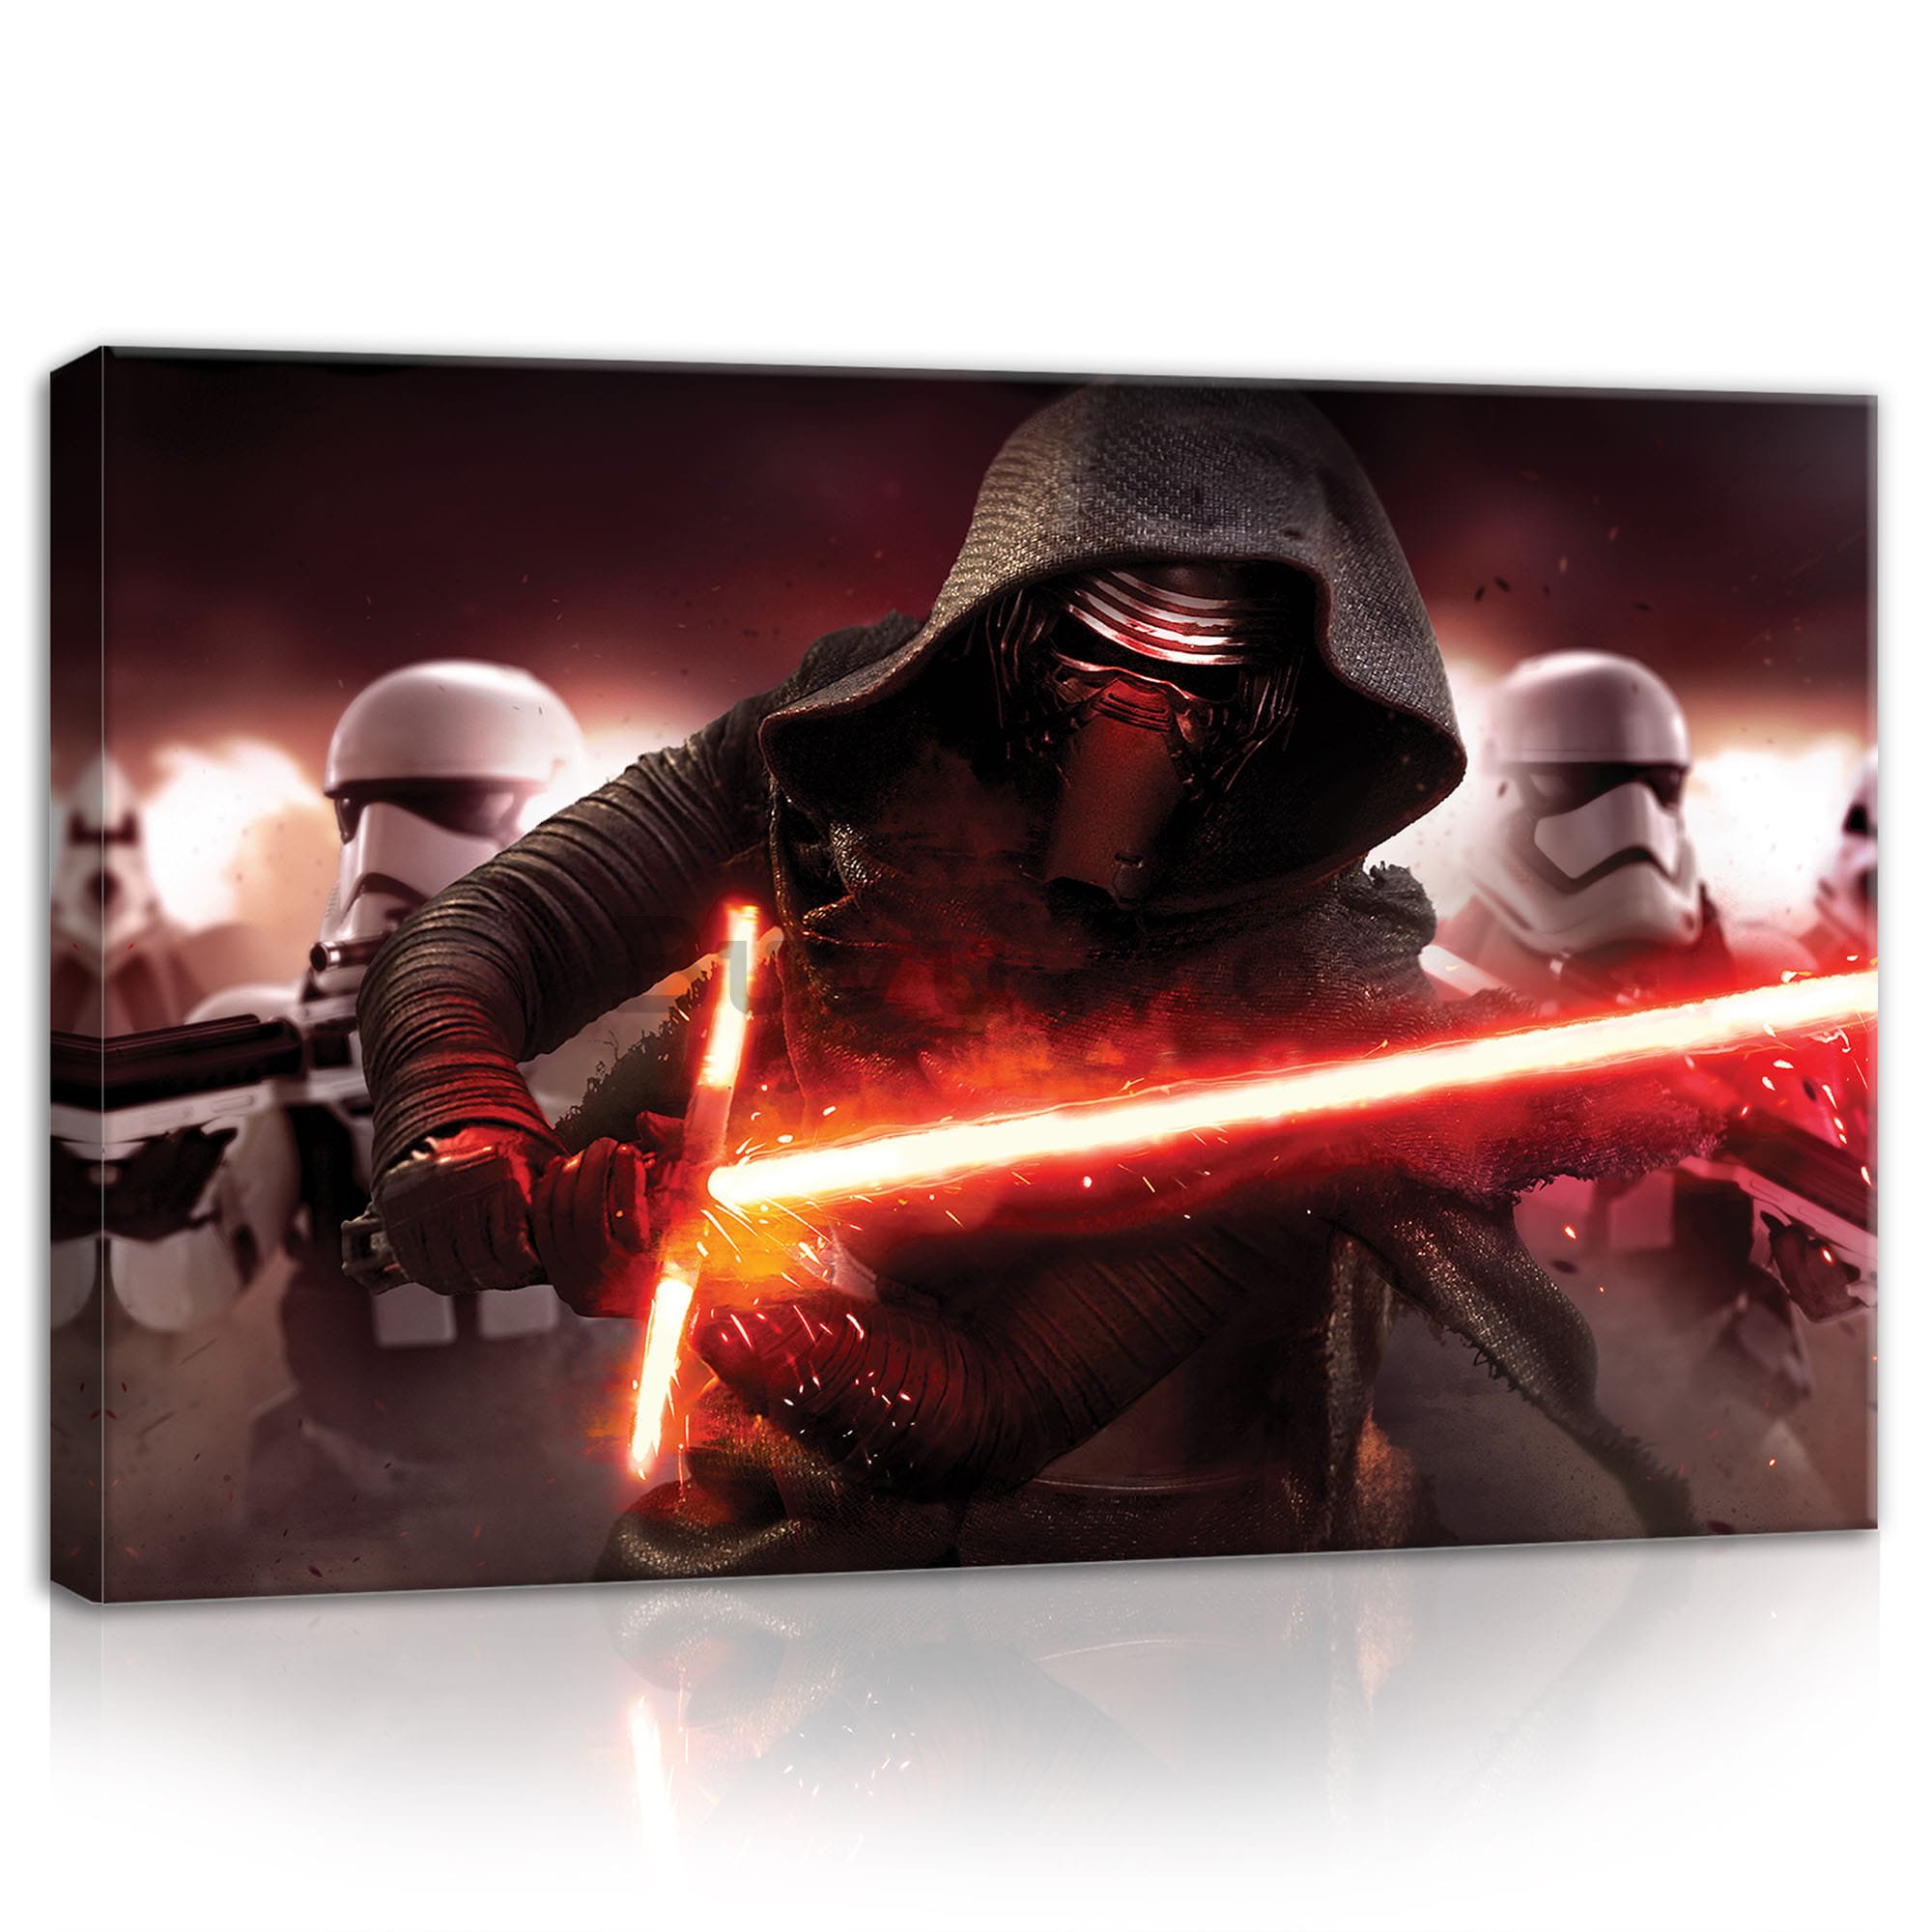 Tablou canvas: Star Wars Kylo Ren's Lightsaber - 60x40 cm